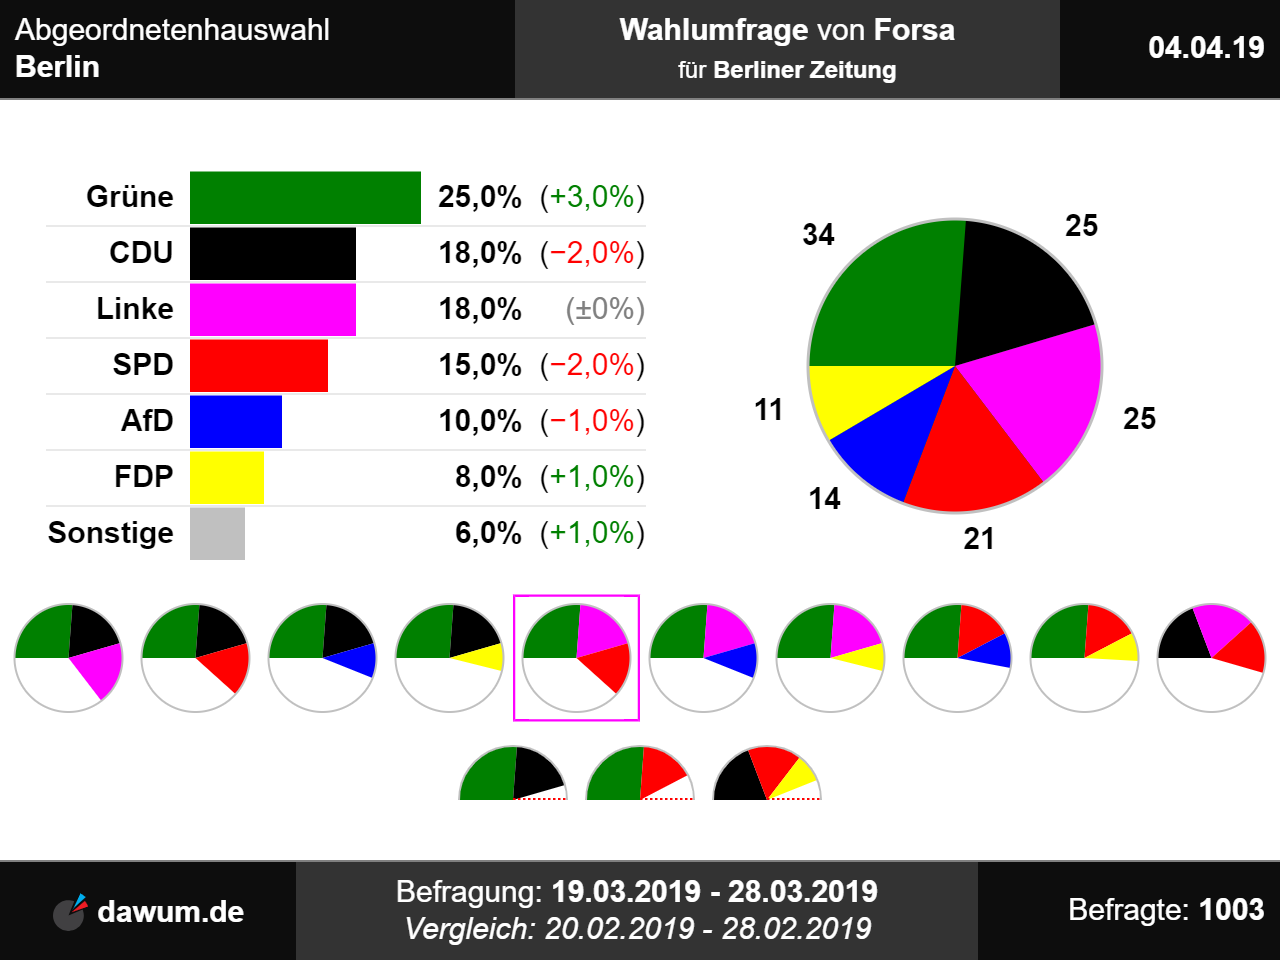 Berlin Wahl Ergebnisse